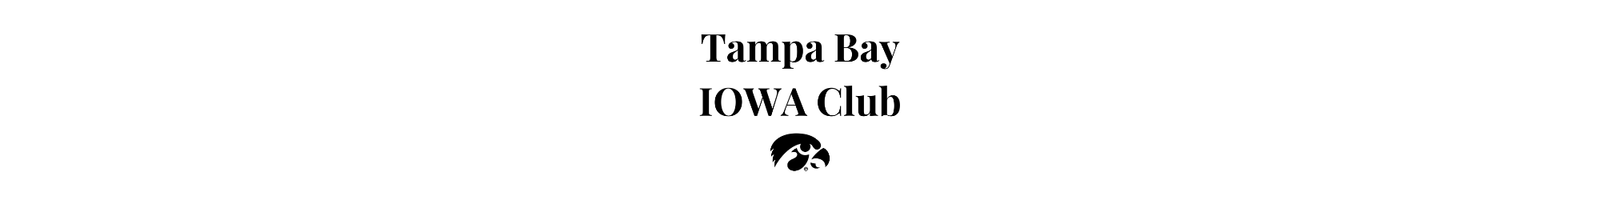 Tampa Bay Iowa Club